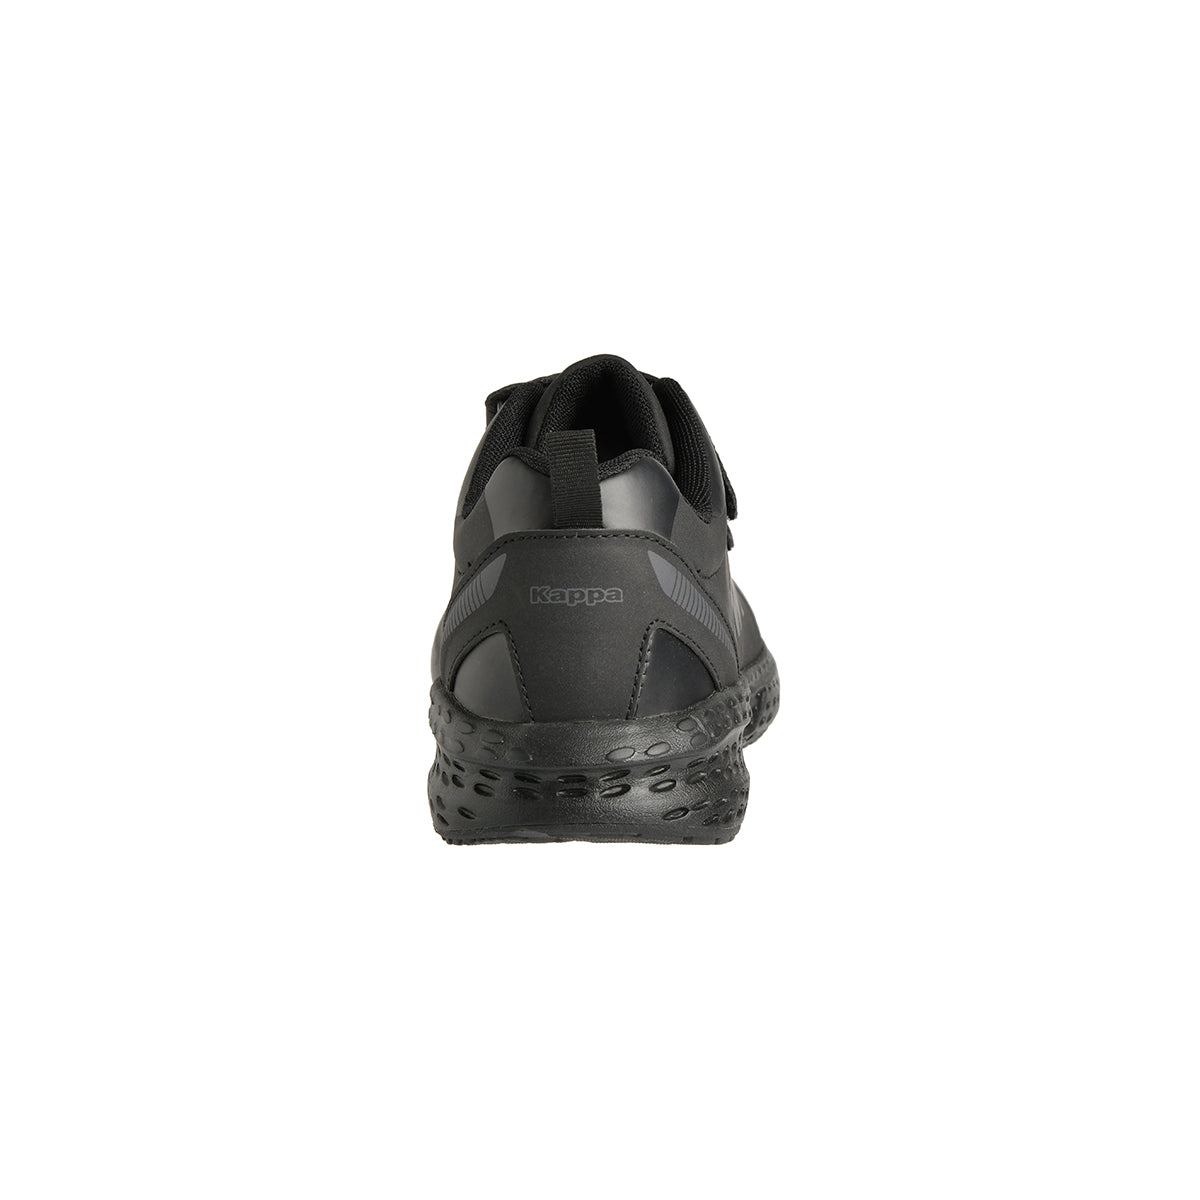 Chaussures training Glinch 2 noir homme - Image 3